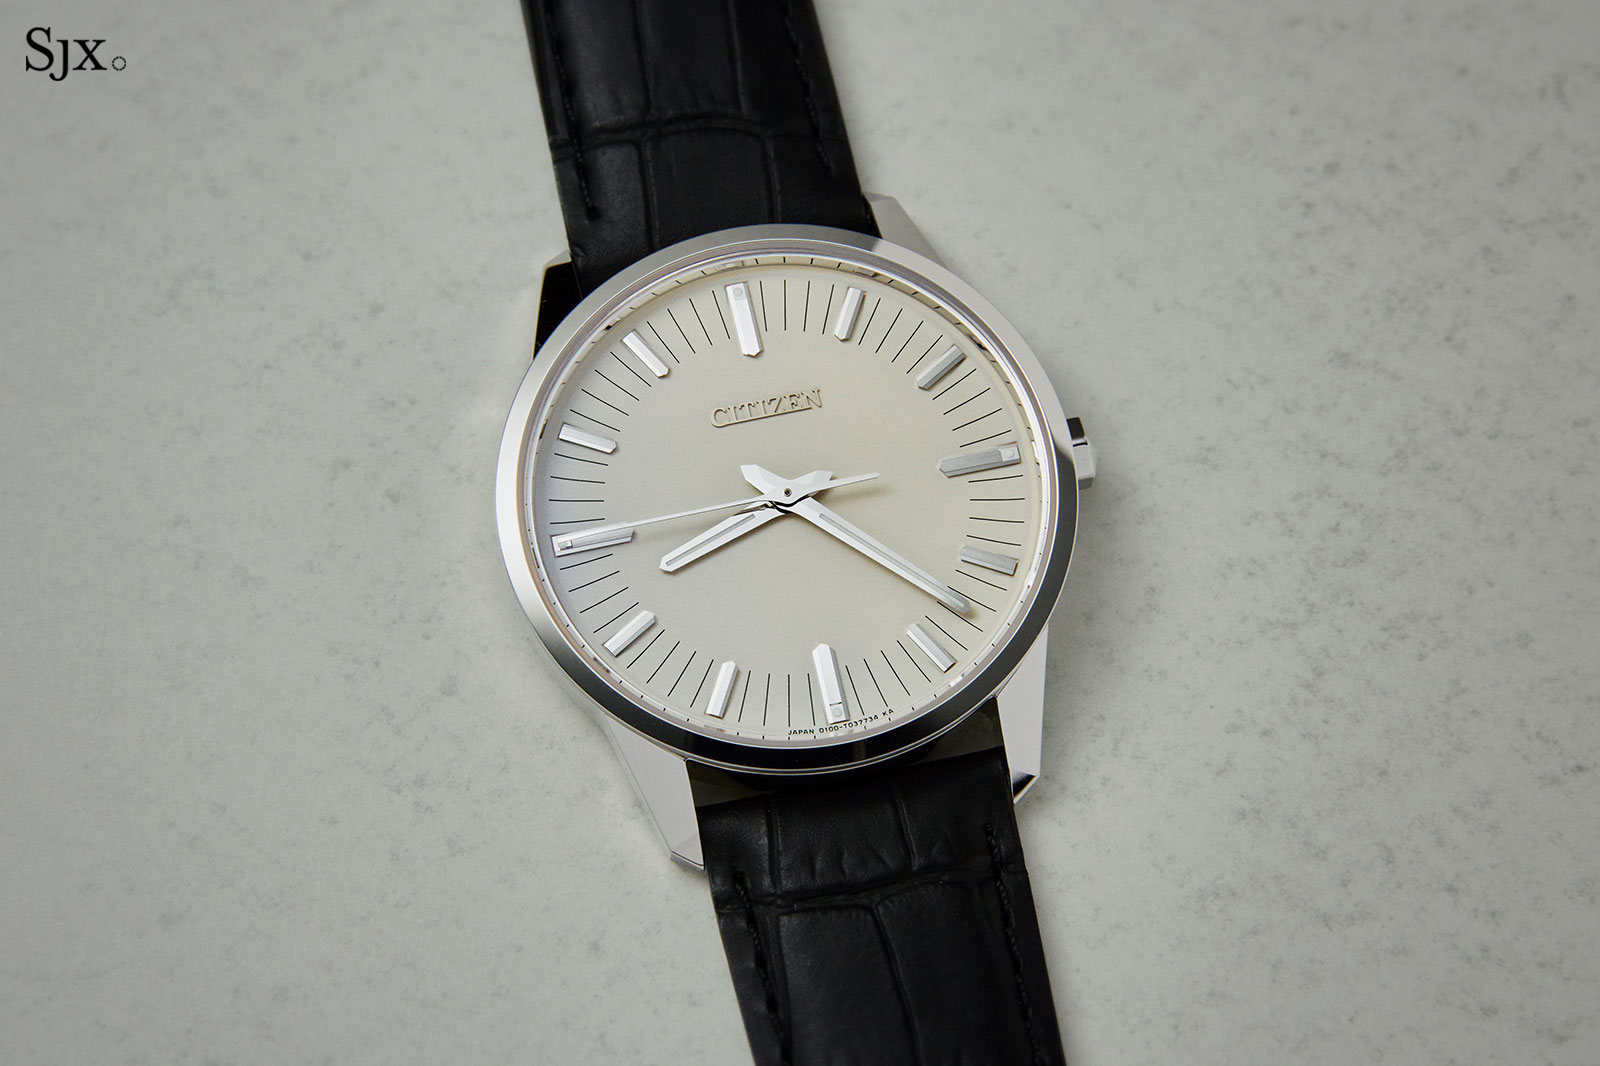 quartz accuracy watch price